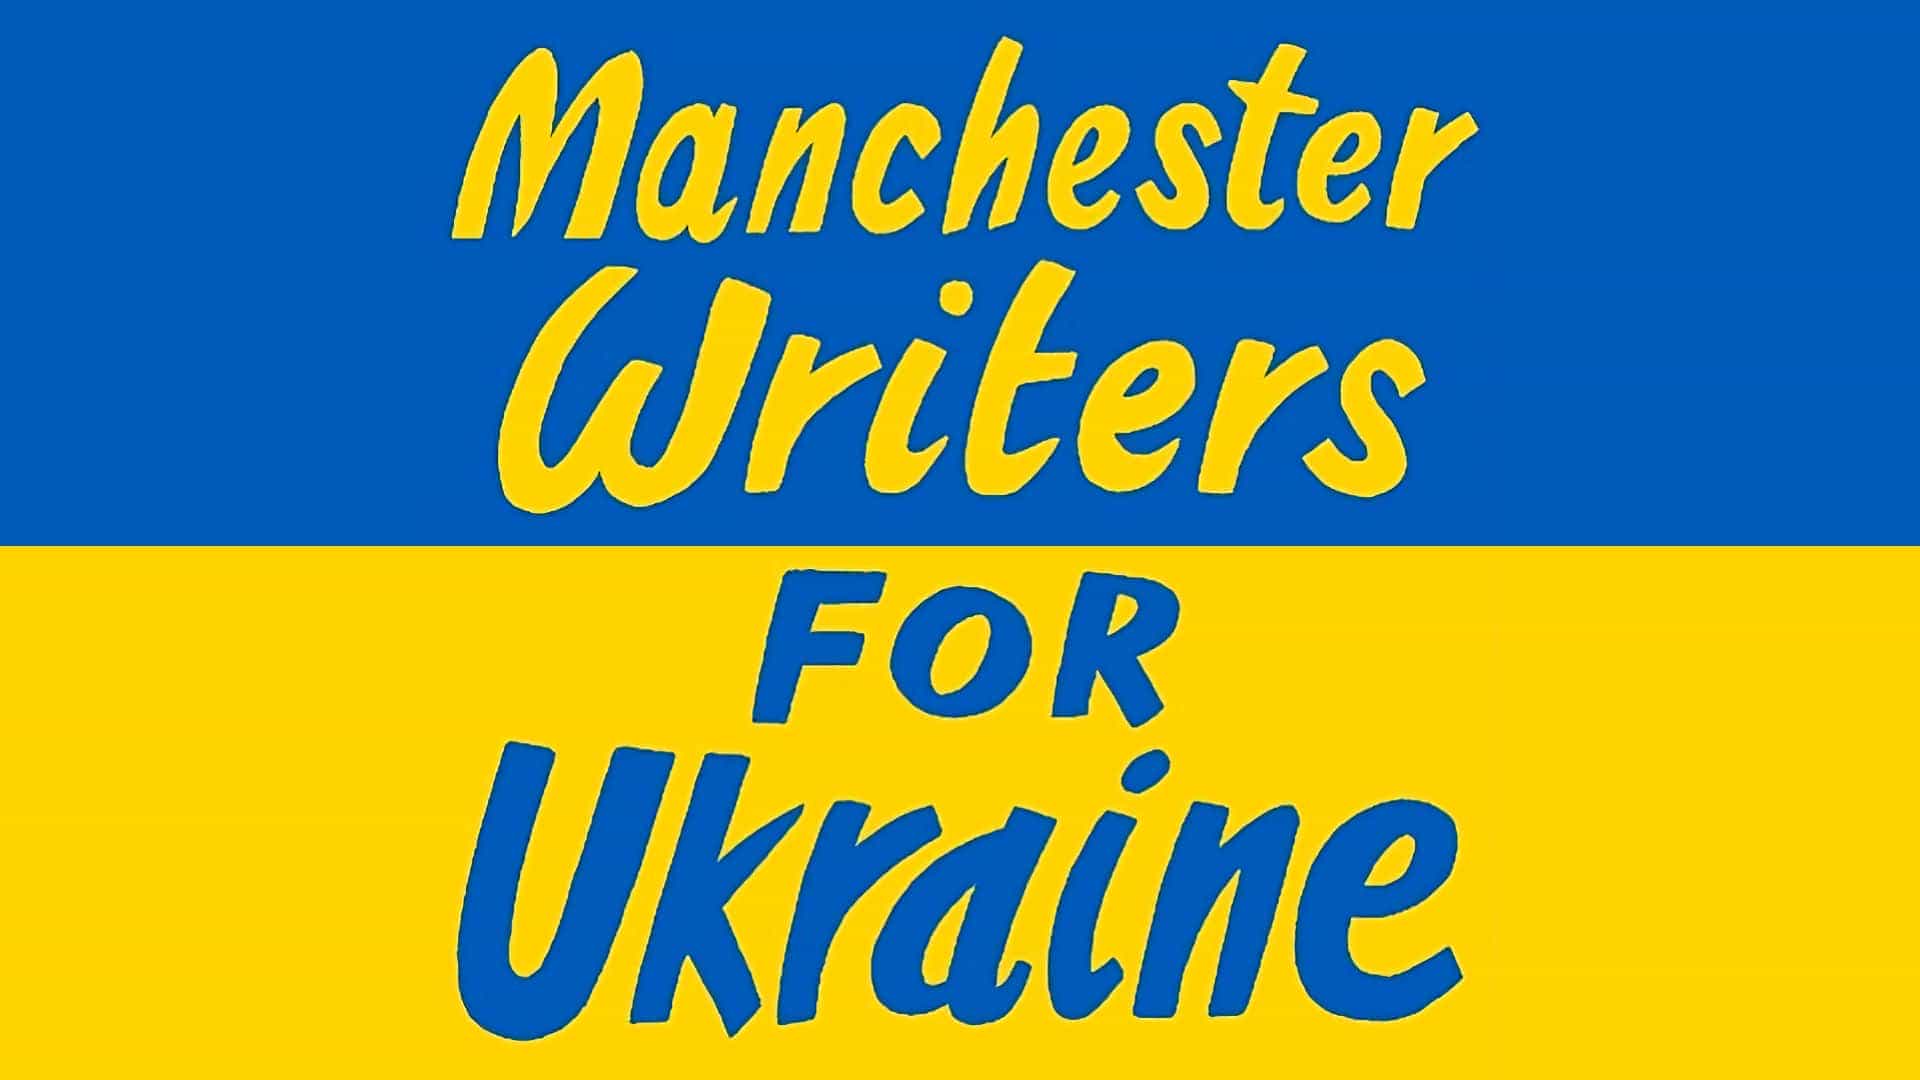 Manchester Writers For Ukraine